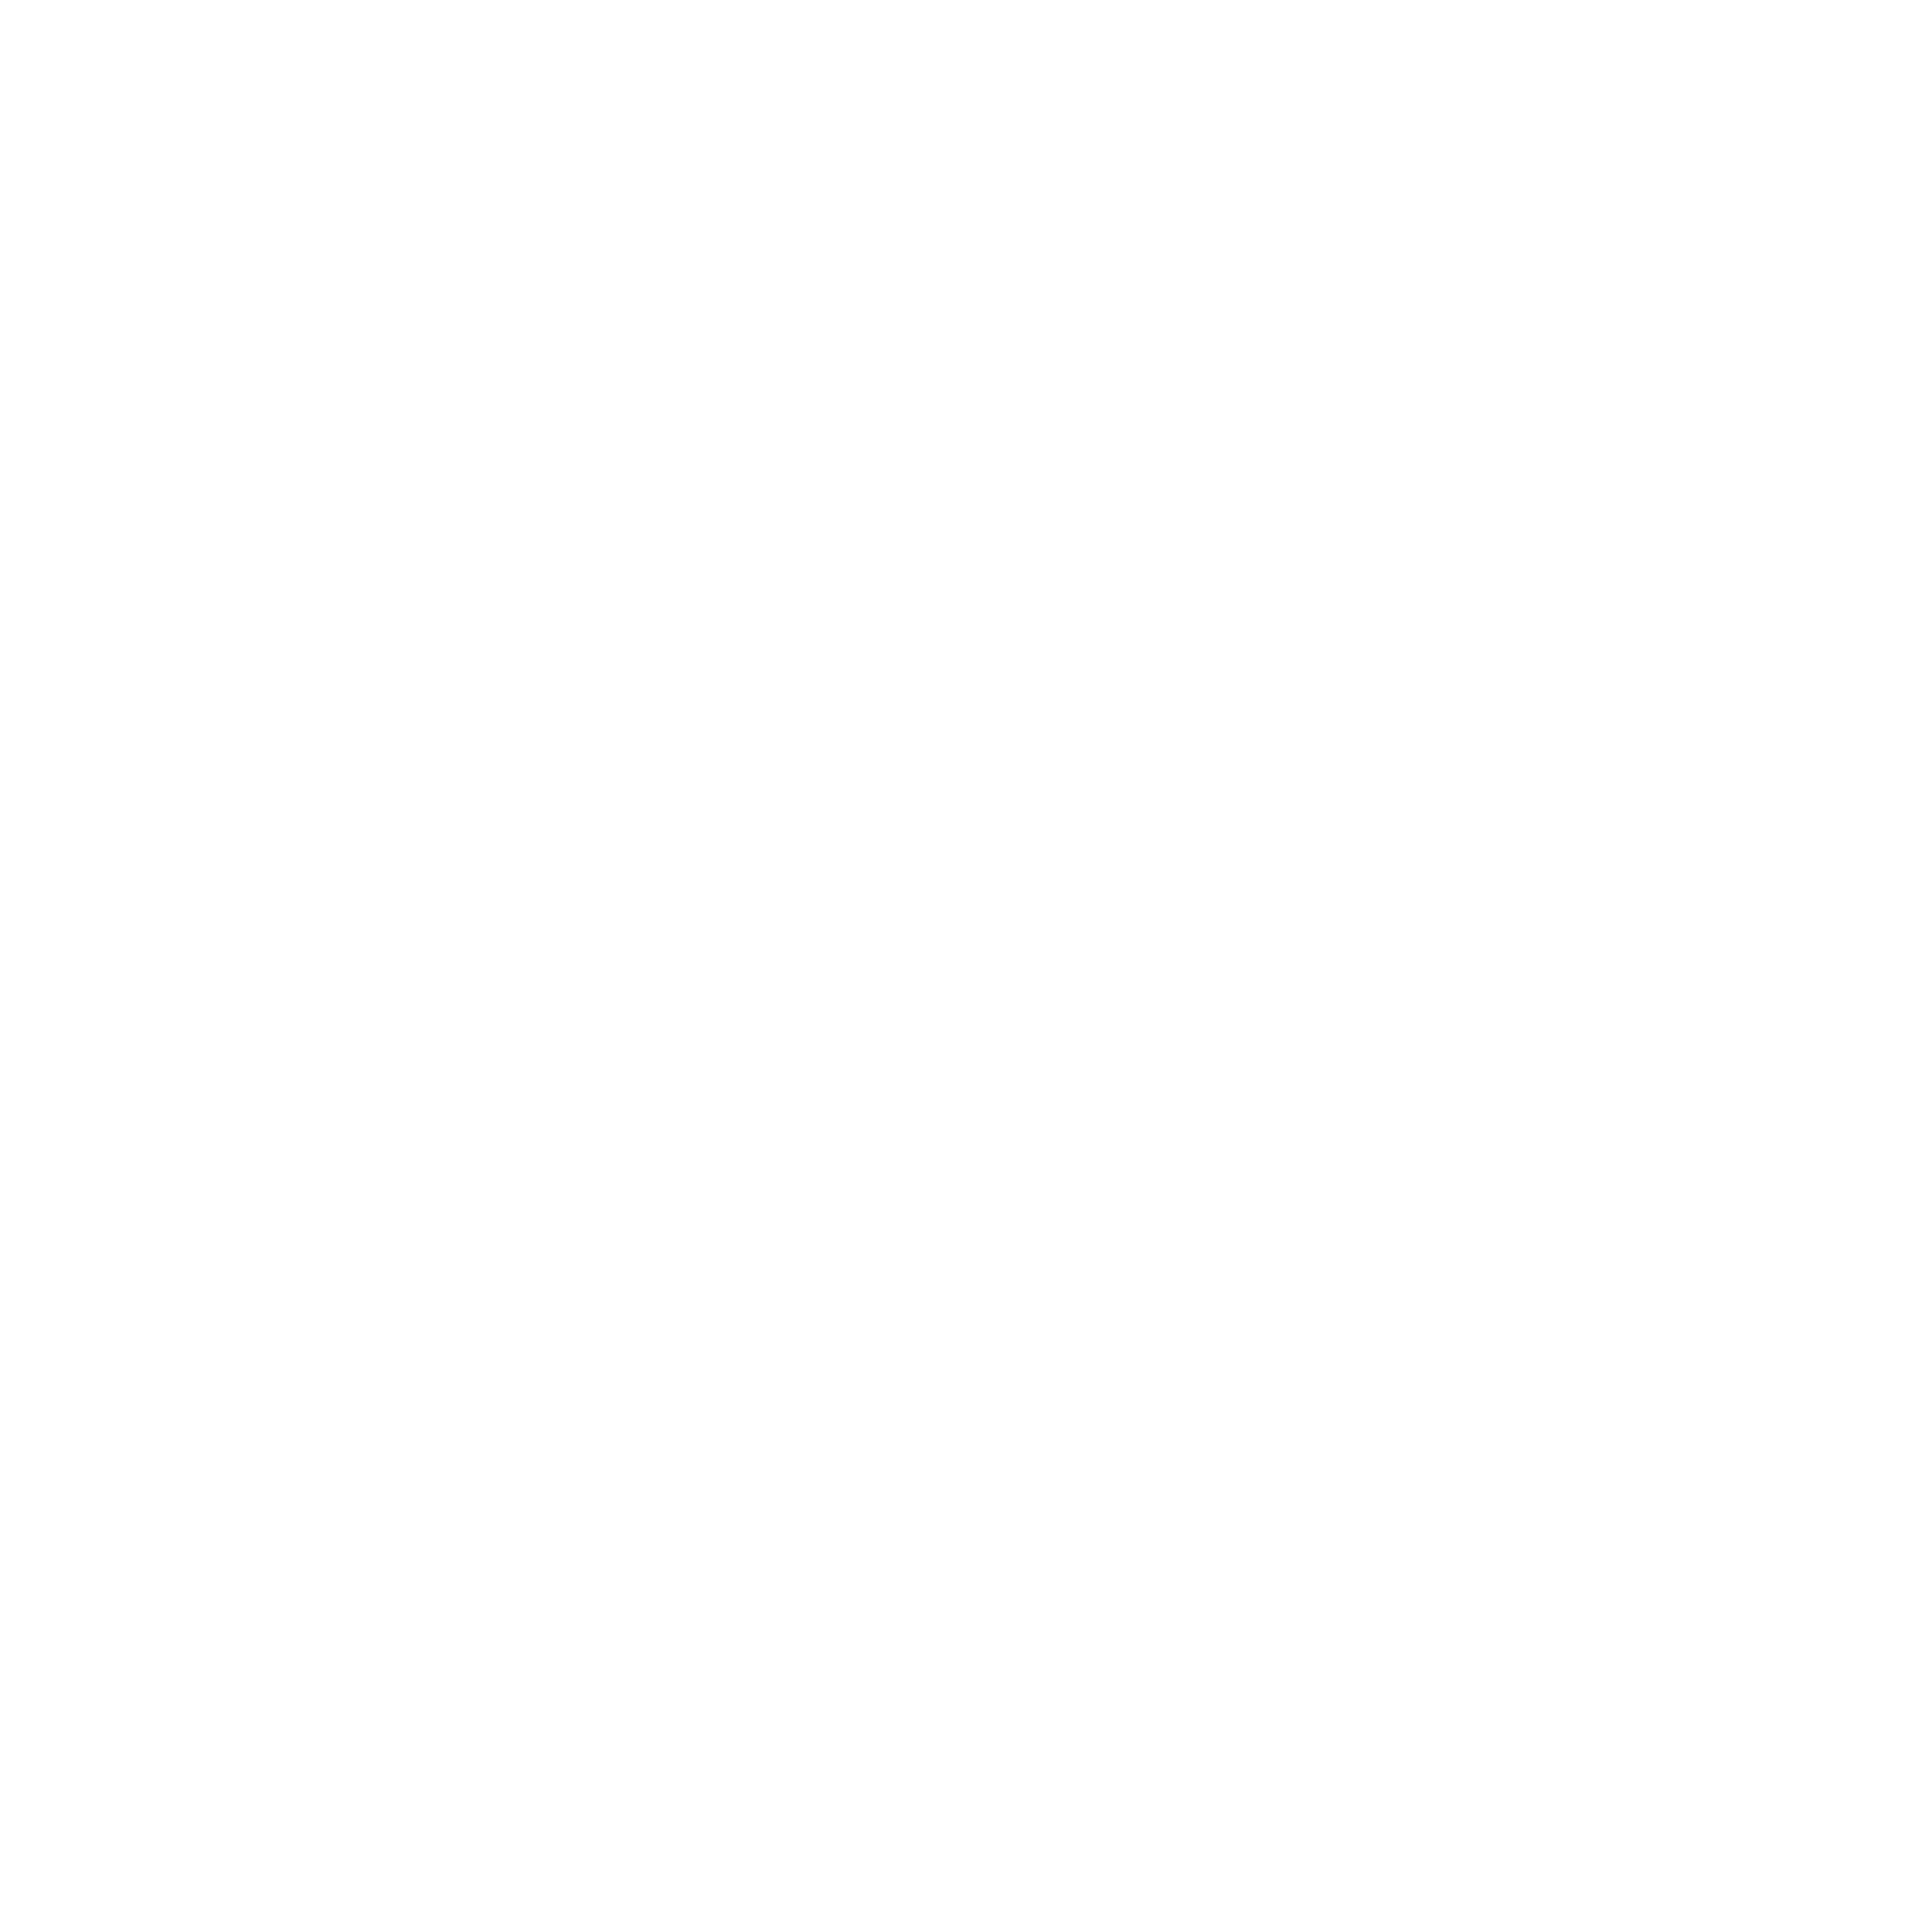 Daikin Logo - Daikin Logo PNG Transparent & SVG Vector - Freebie Supply